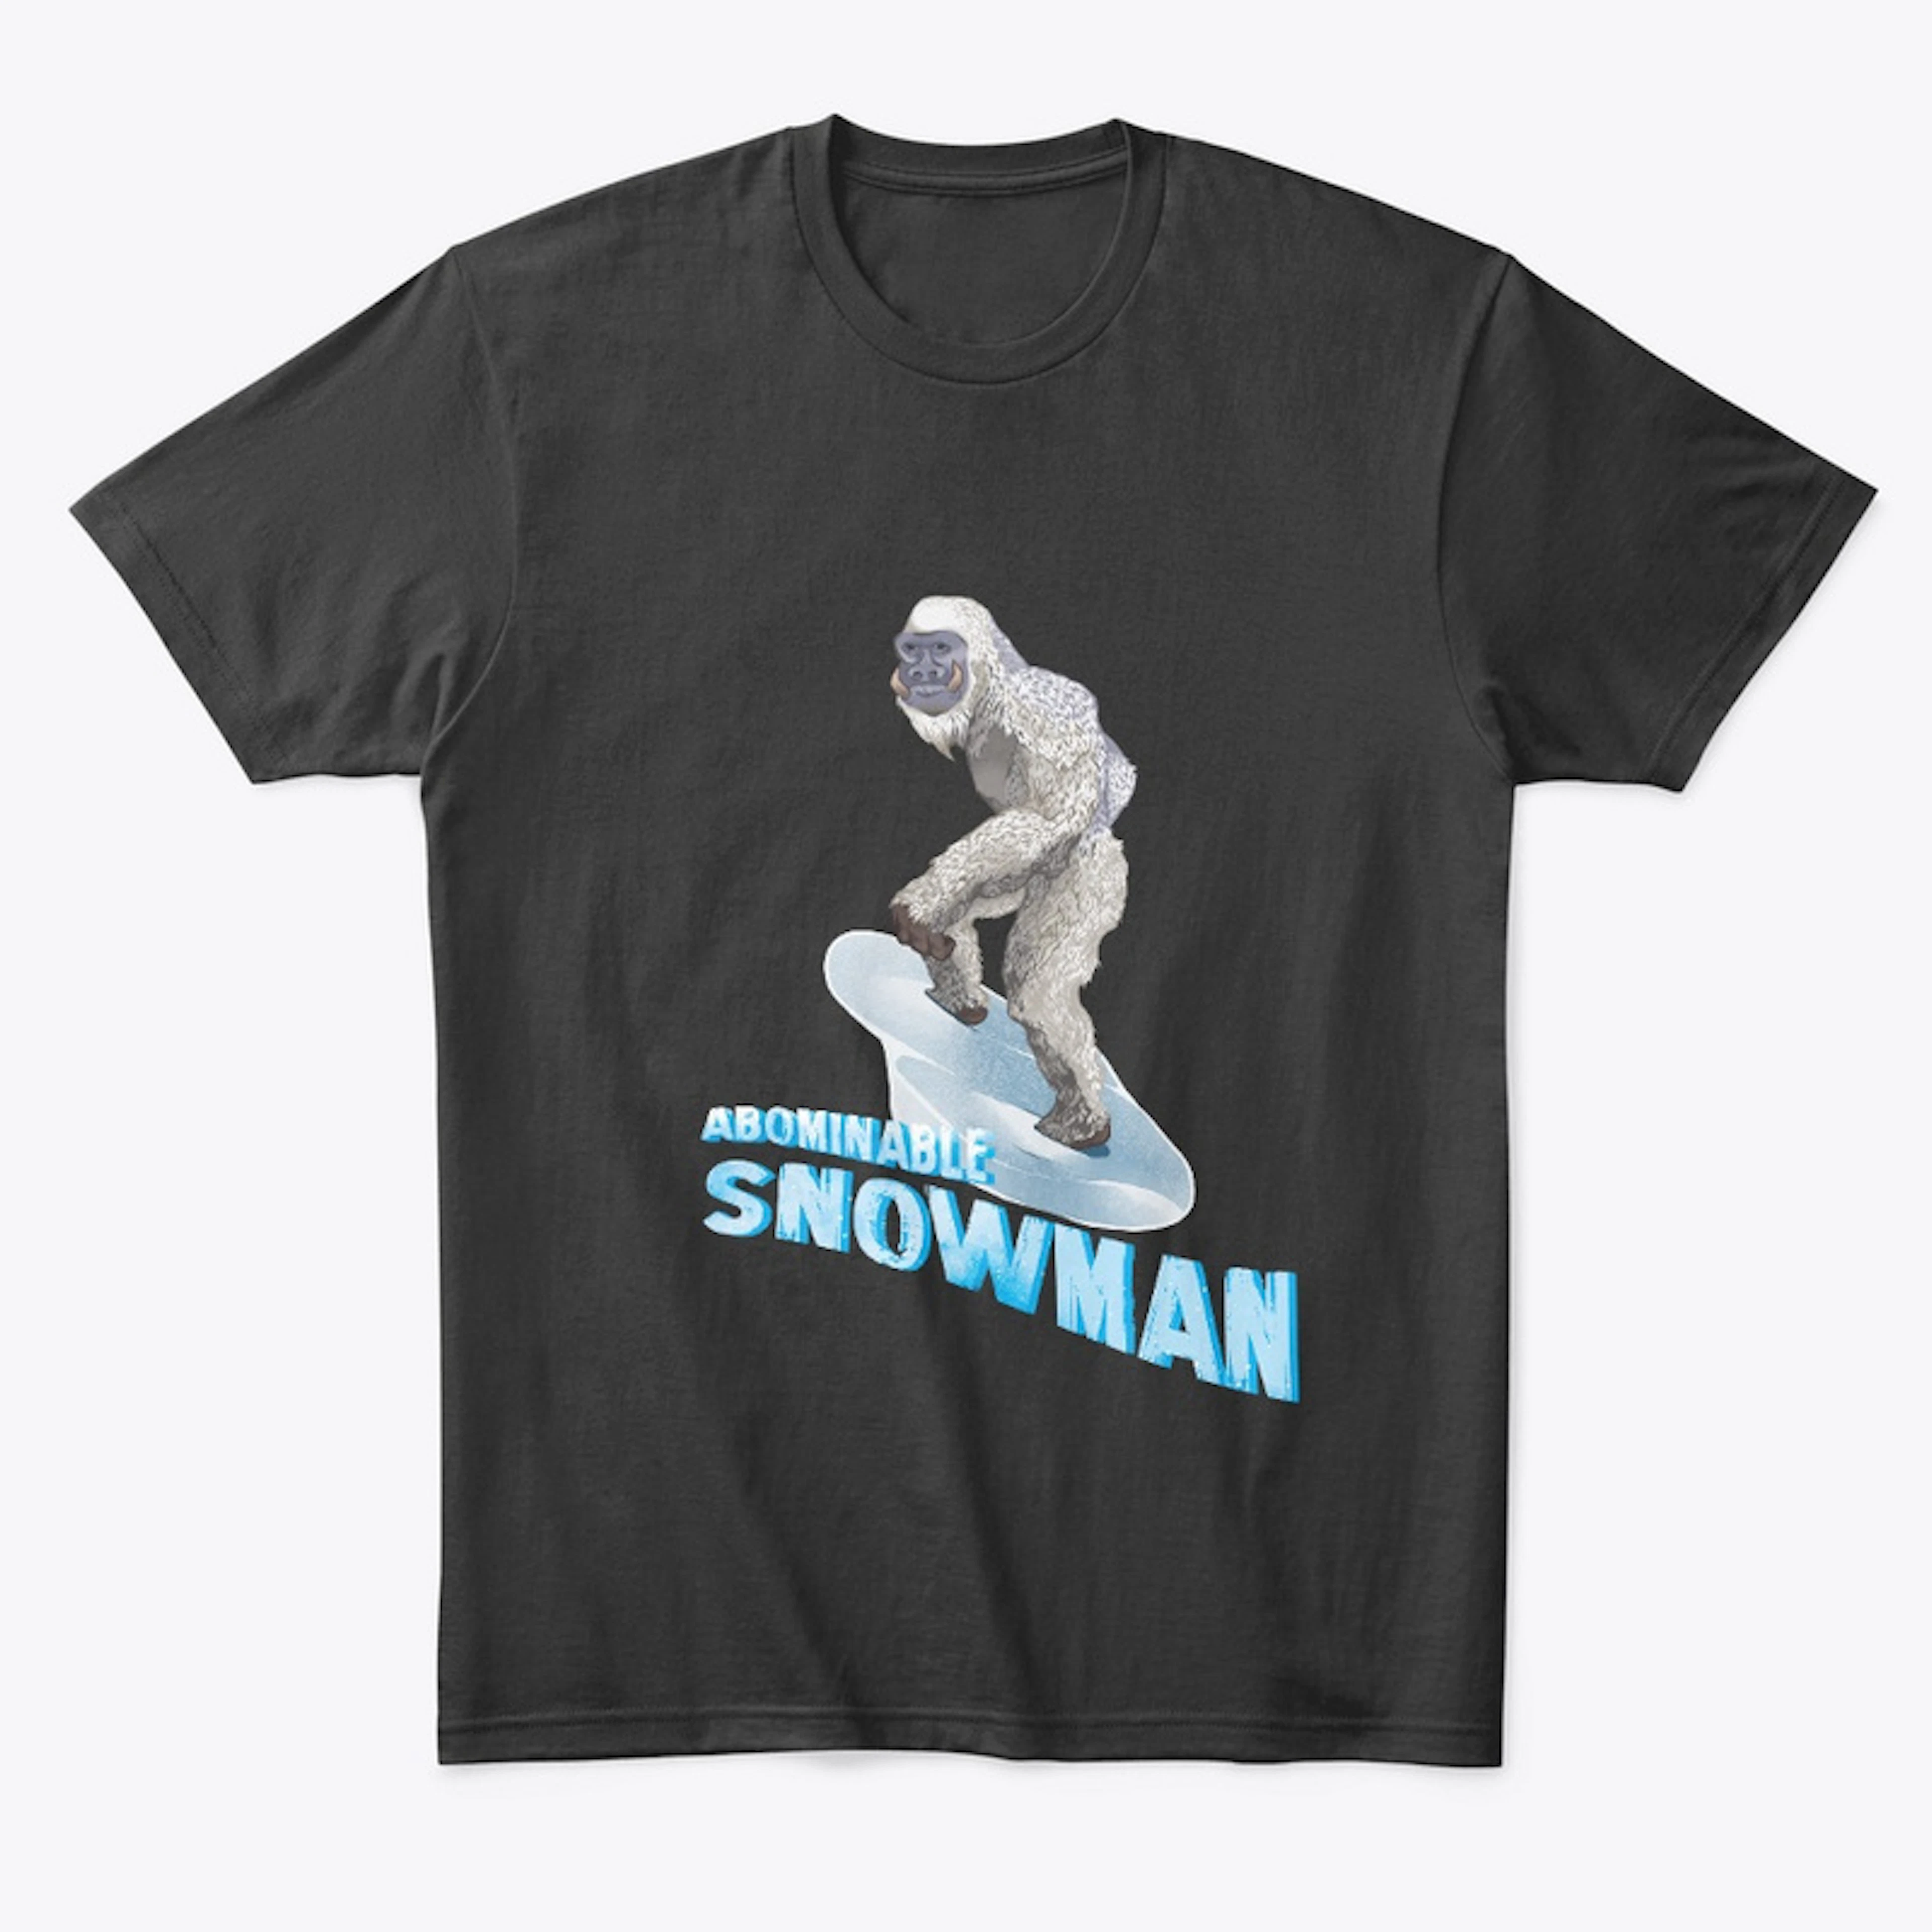 Abominable Snowman Tee